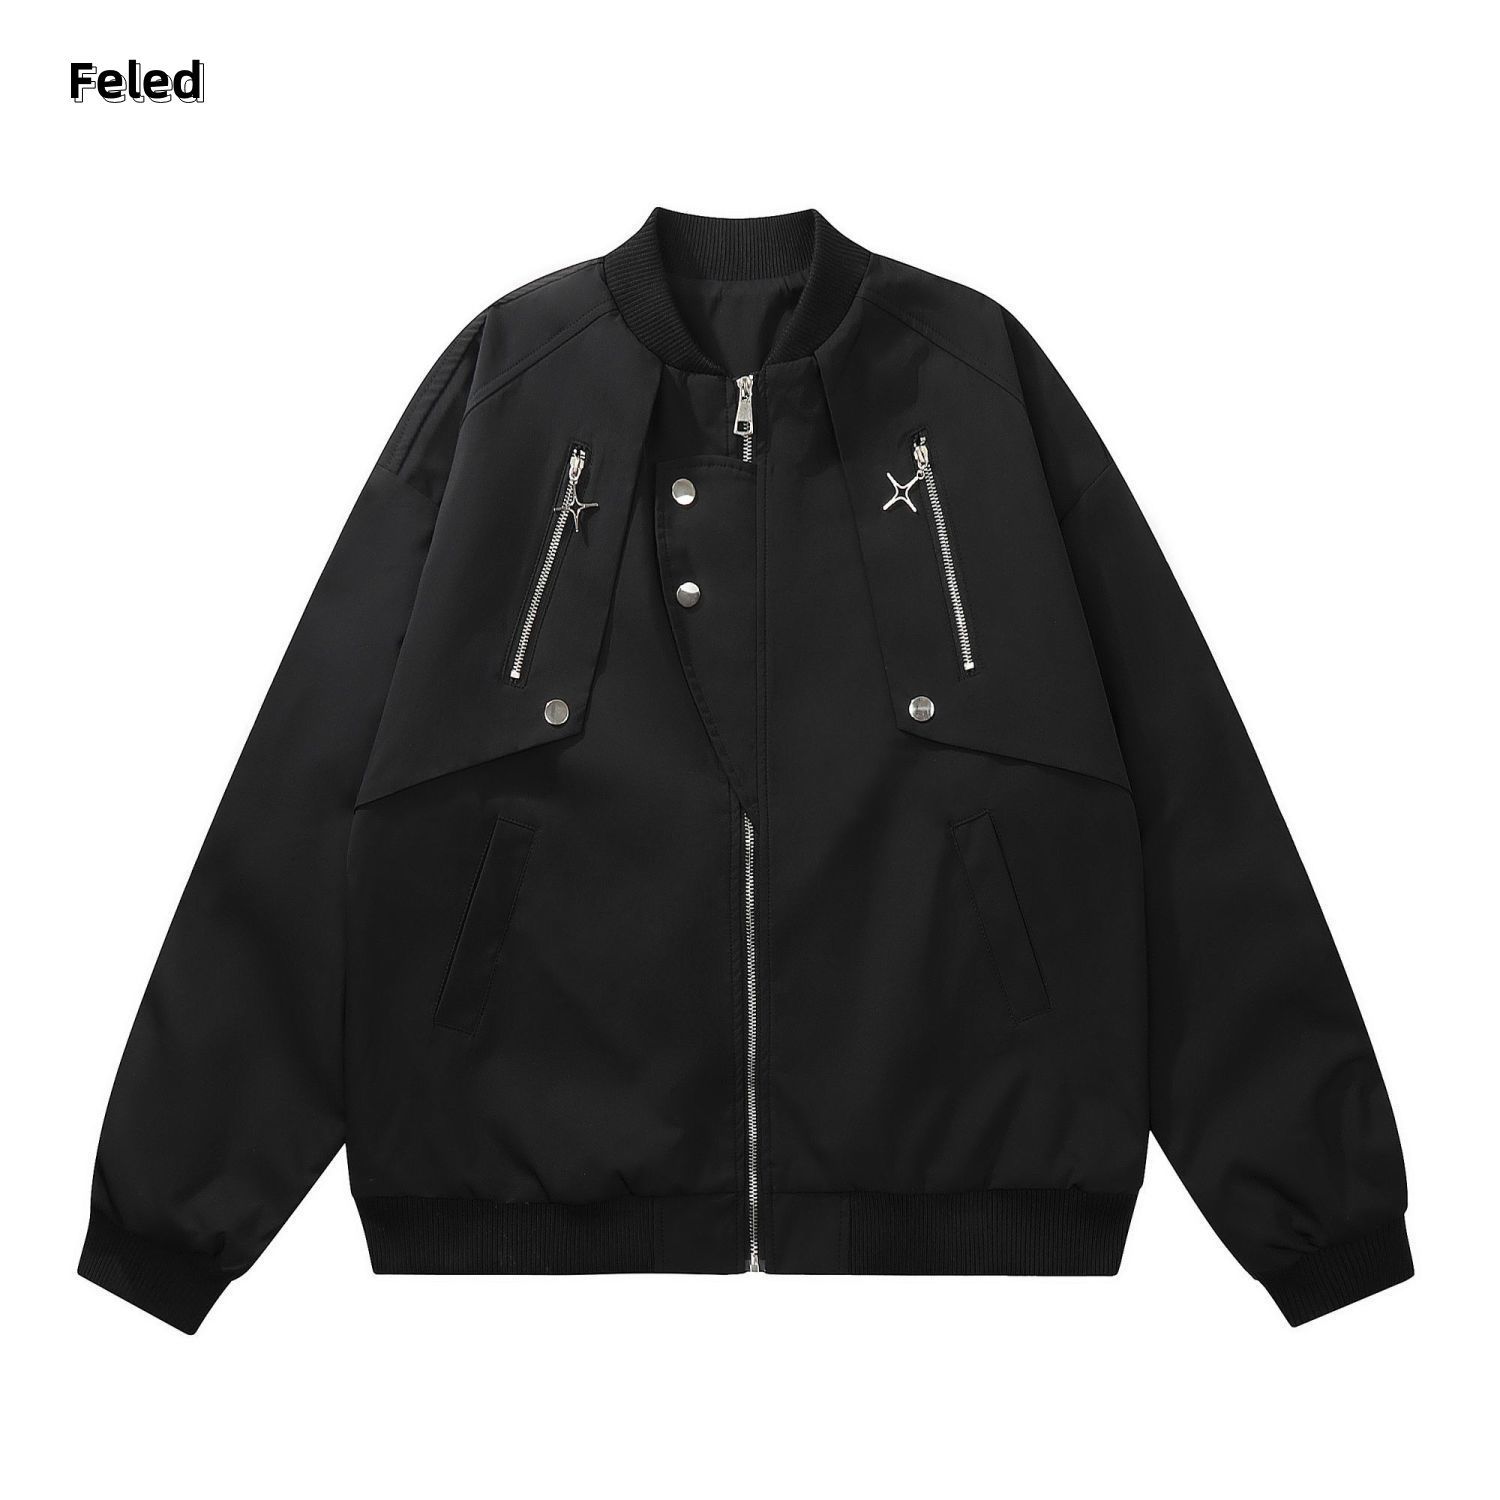 Feila Denton design multi-zipper flight suit jacket for men and women in autumn and winter versatile casual couple jacket trendy tops